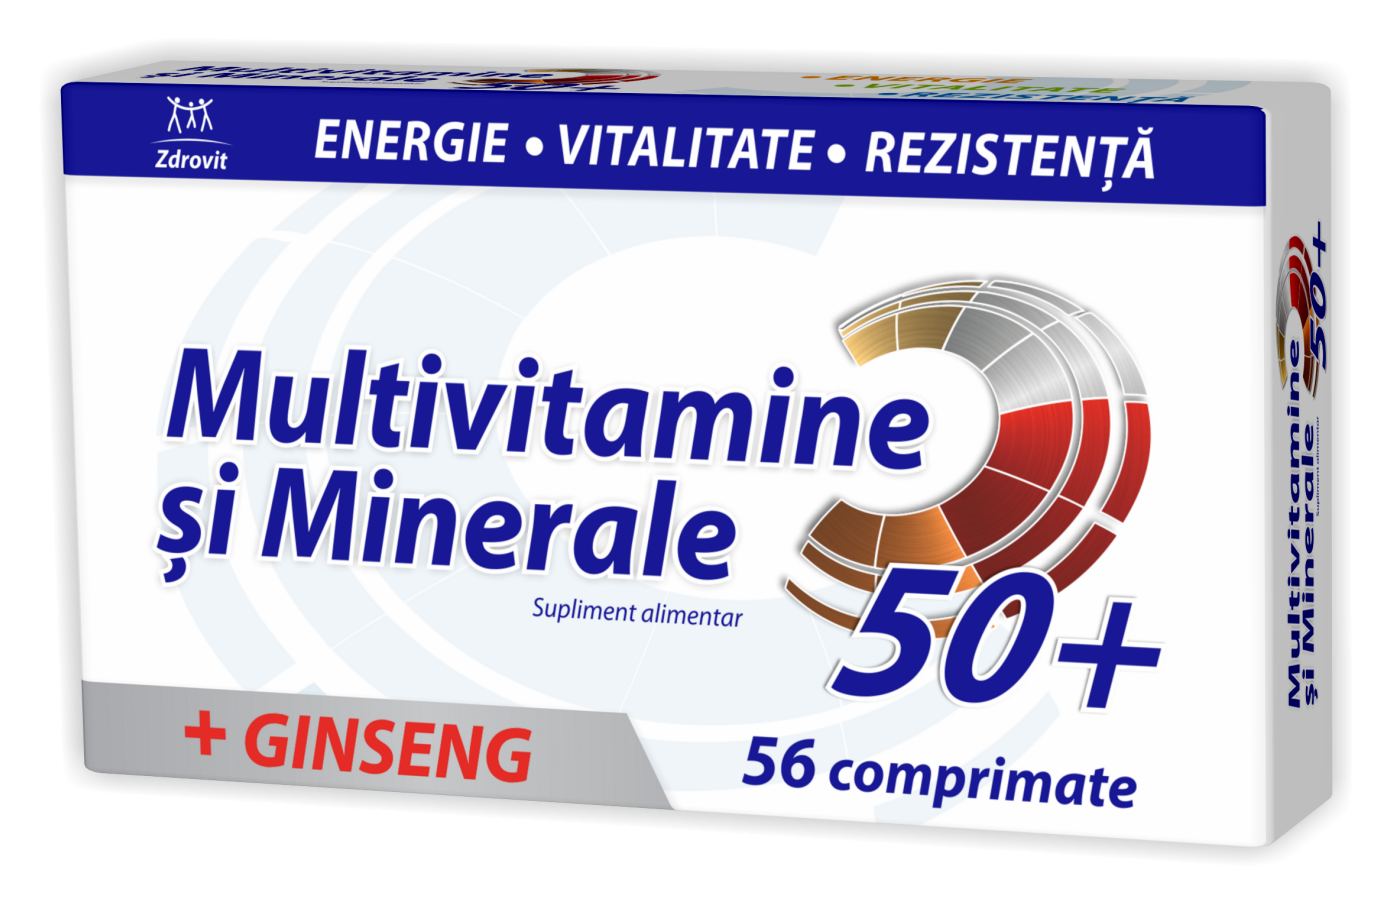 Multivitamine + minerale + ginseng 50+ 56cpr, zdrovit